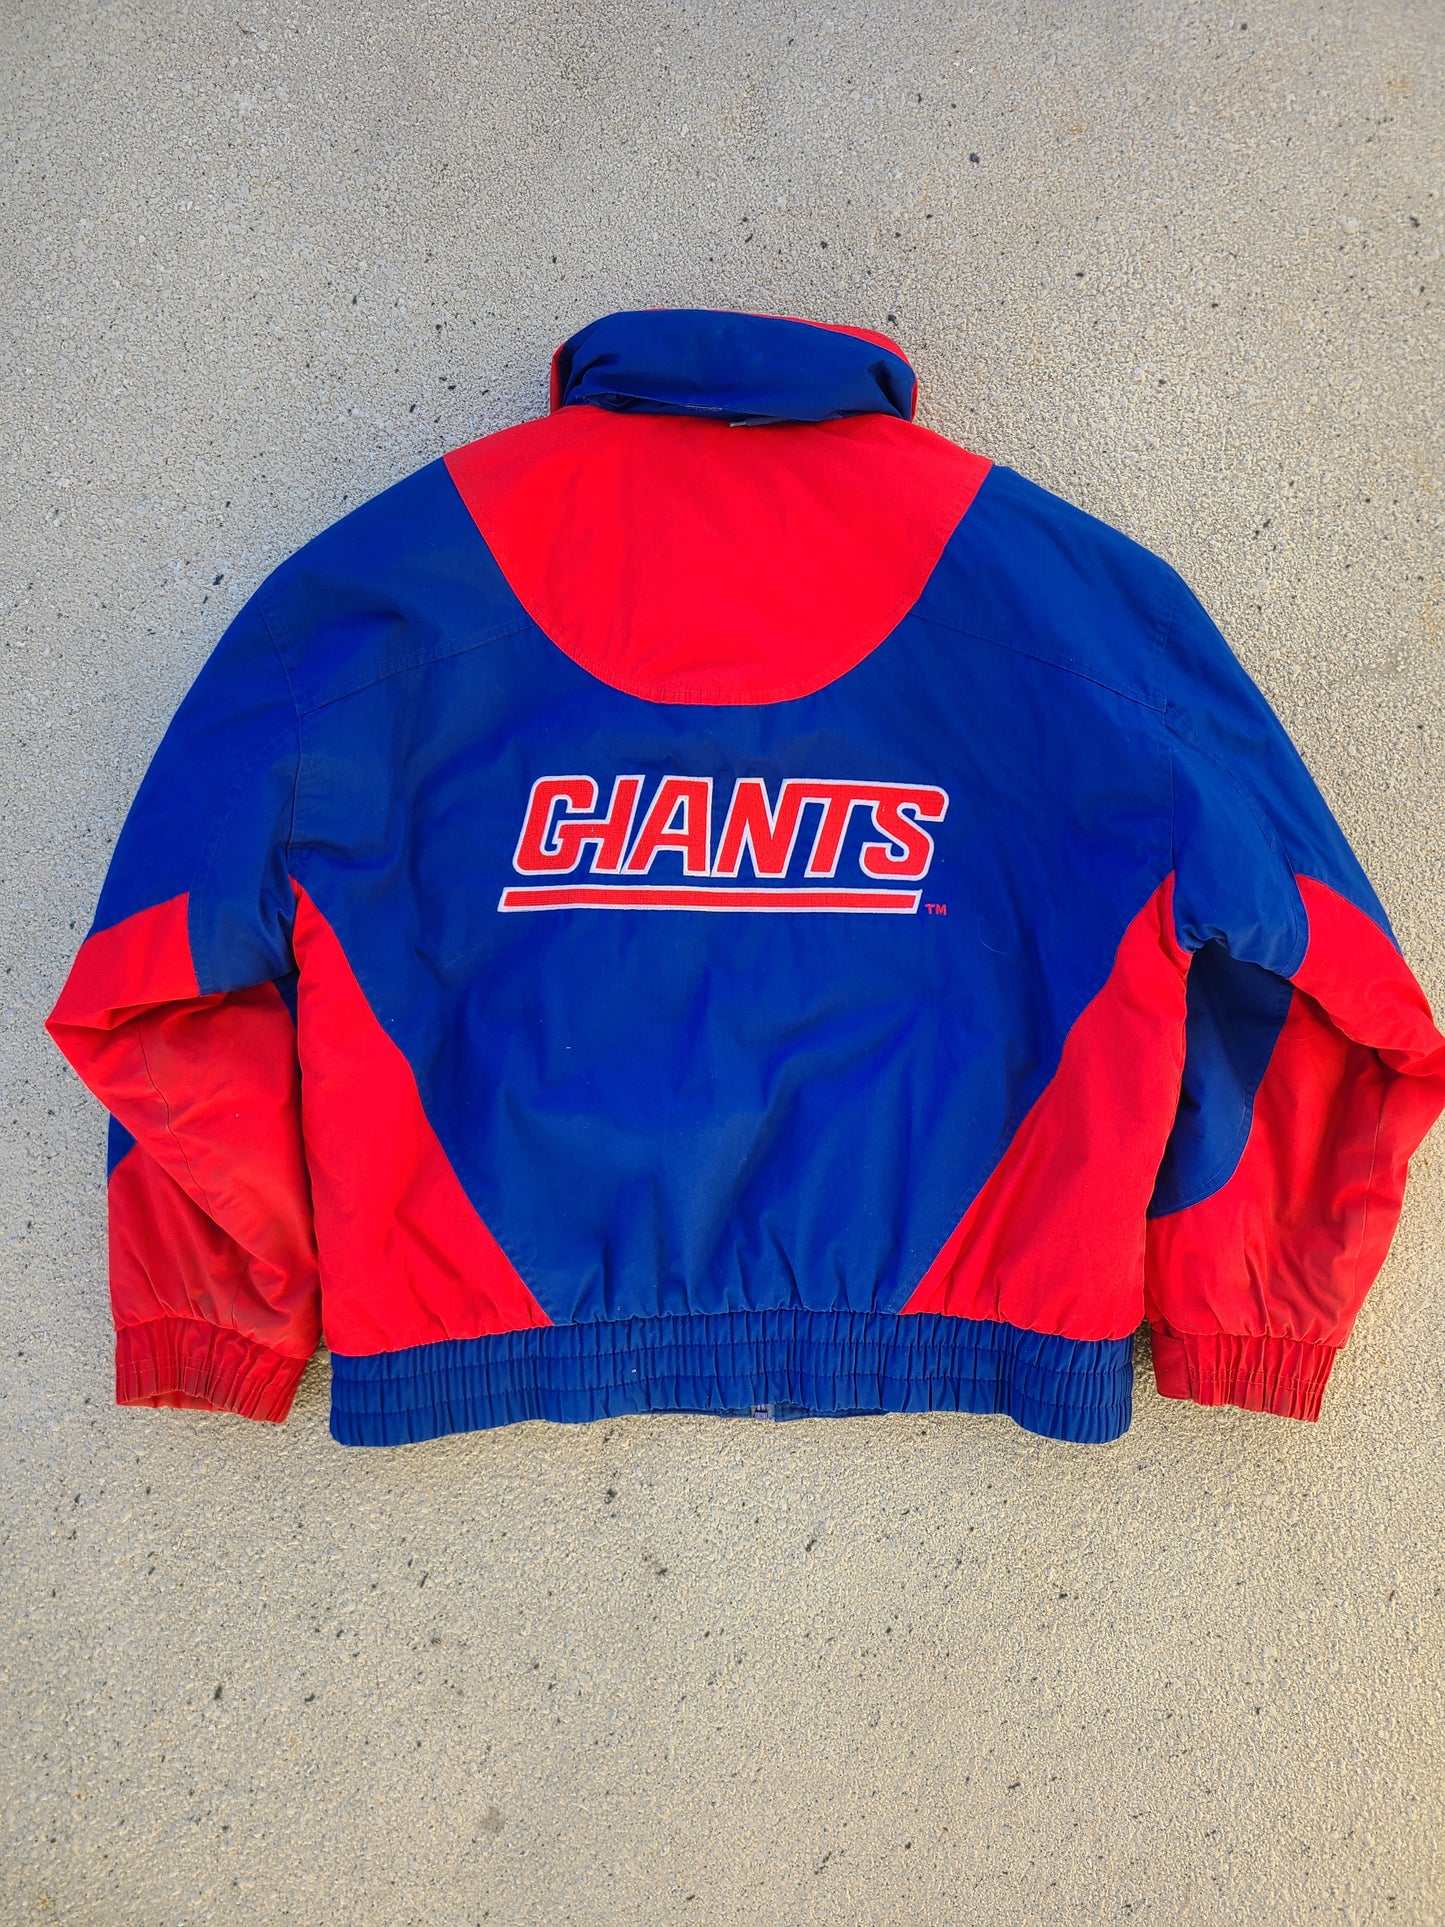 New York Giants Team Coat Size Large